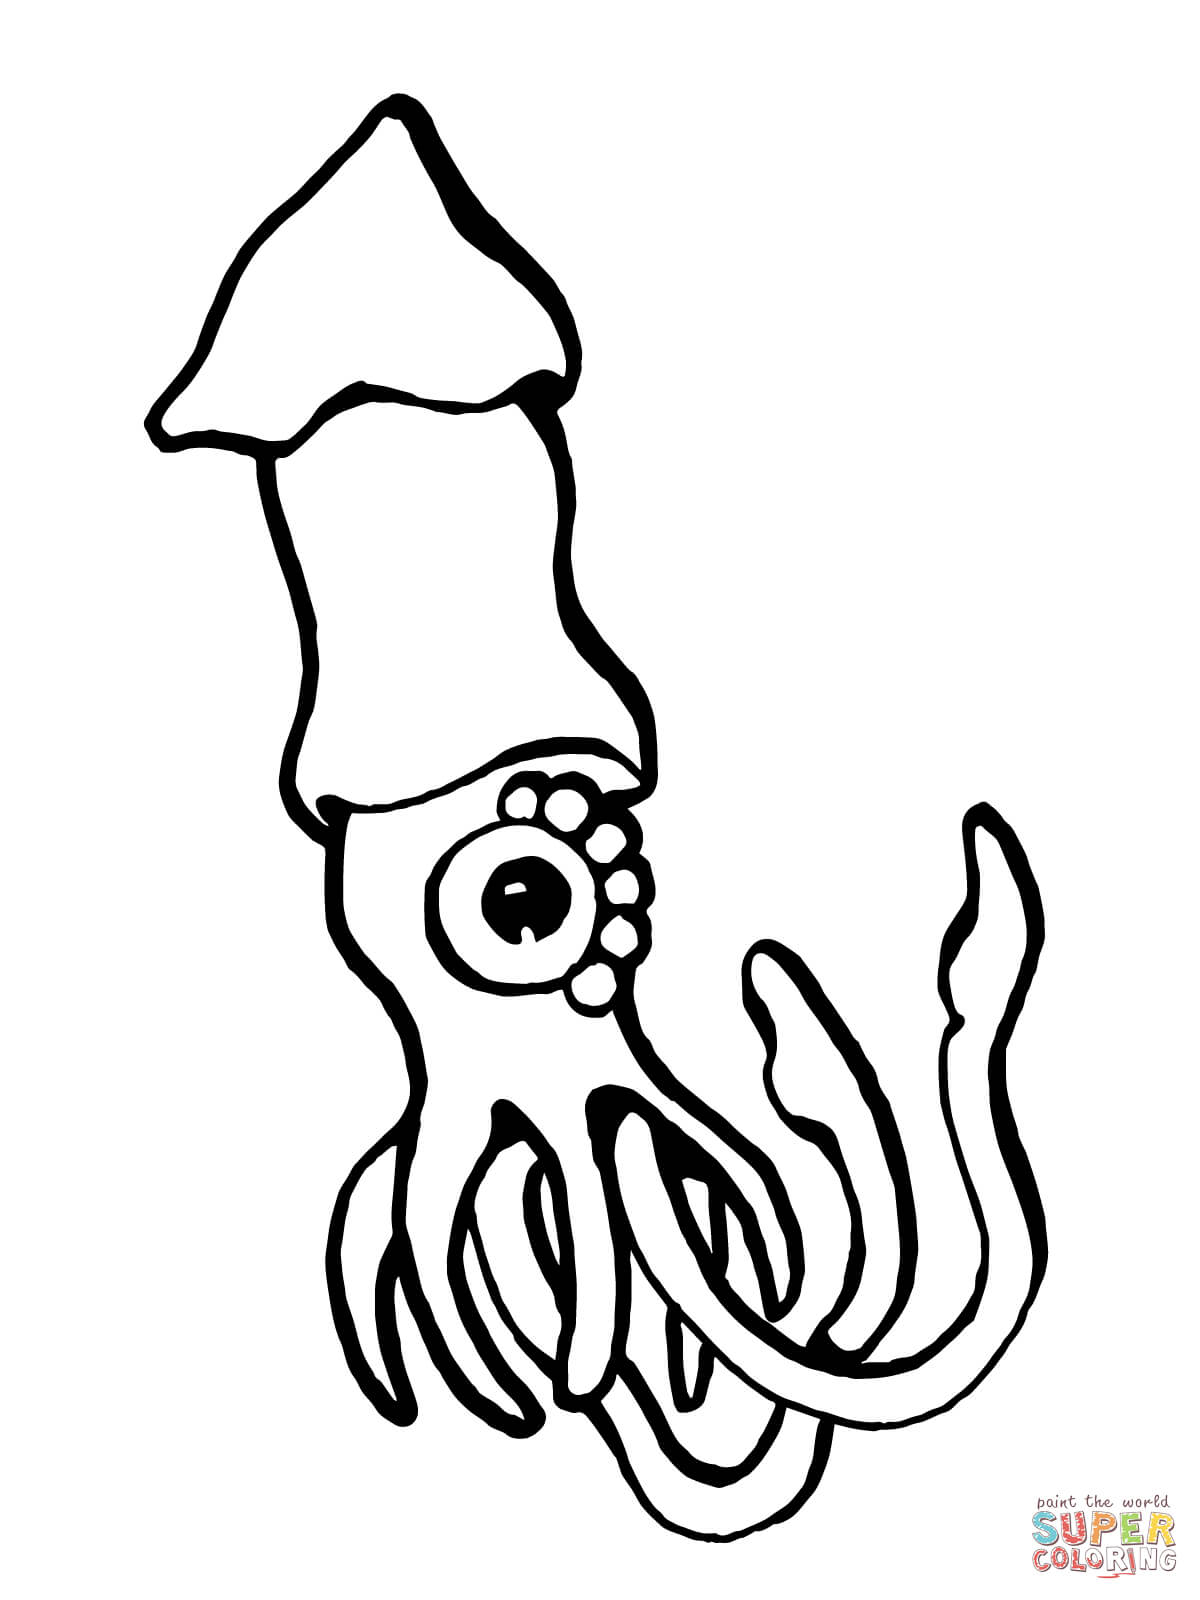 Squid Coloring Pages Printable European Squid Coloring Page Free Printable Coloring Pages